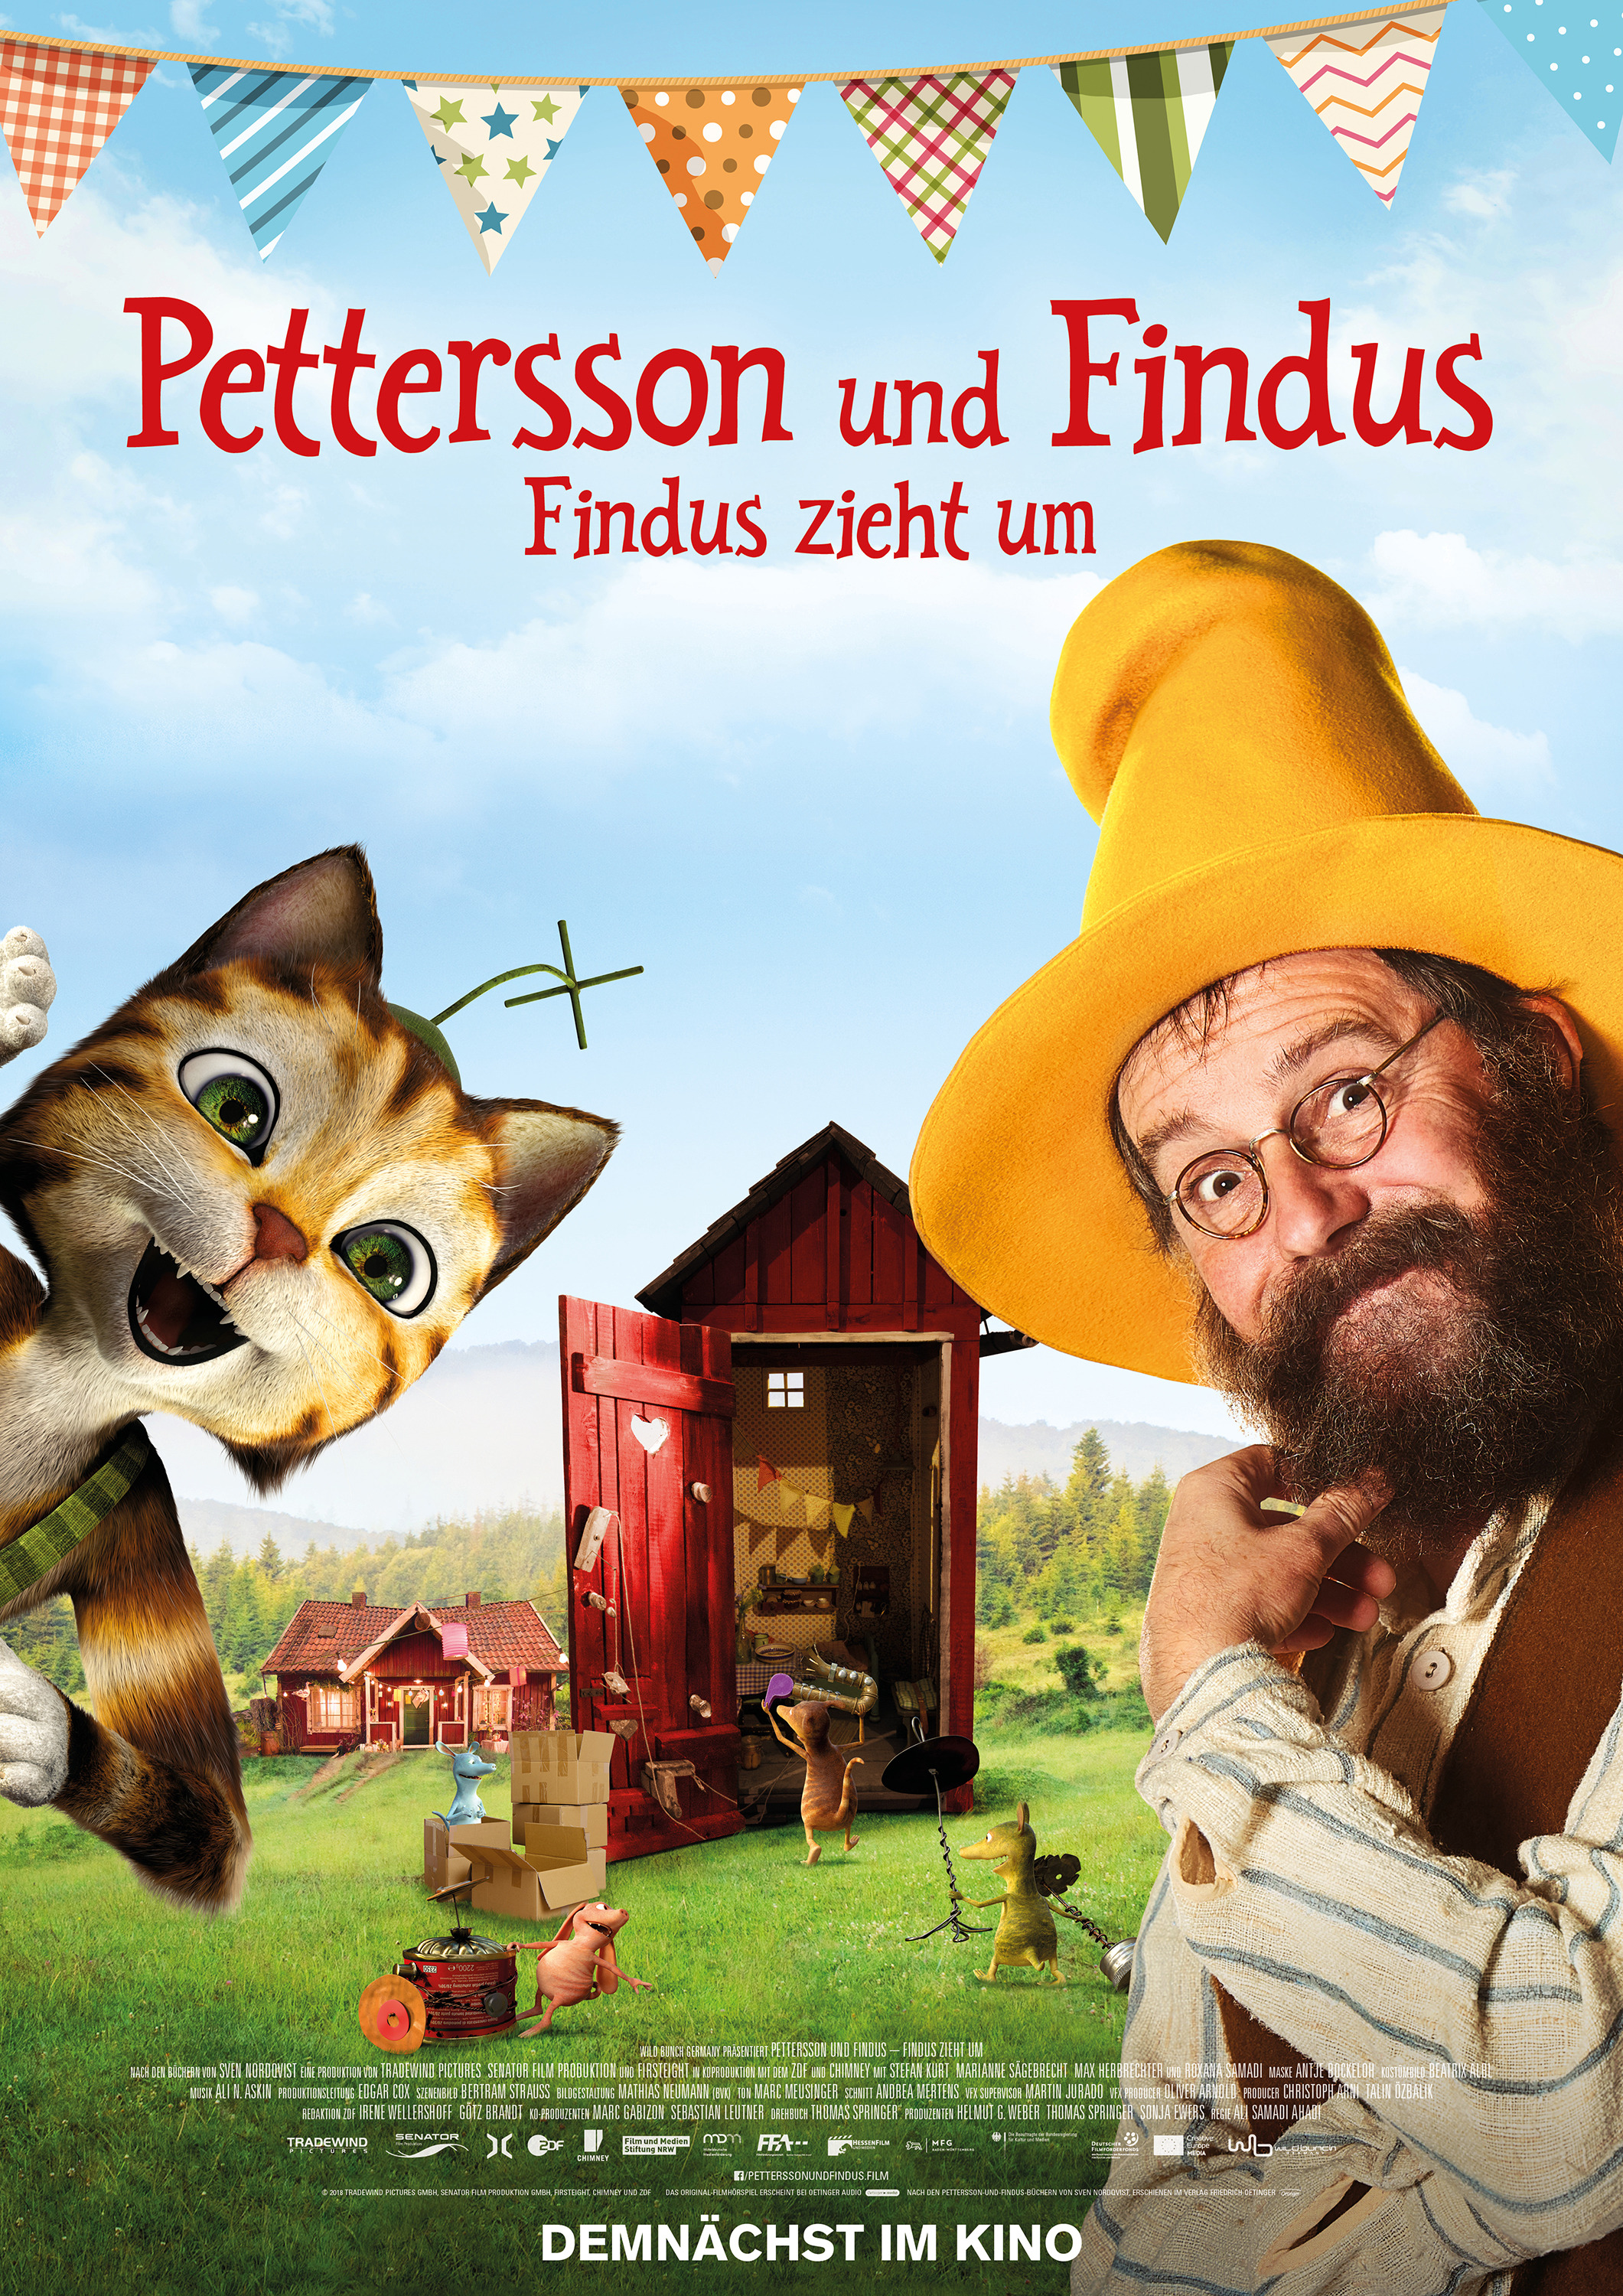 Mega Sized Movie Poster Image for Pettersson und Findus - Findus zieht um (#2 of 2)